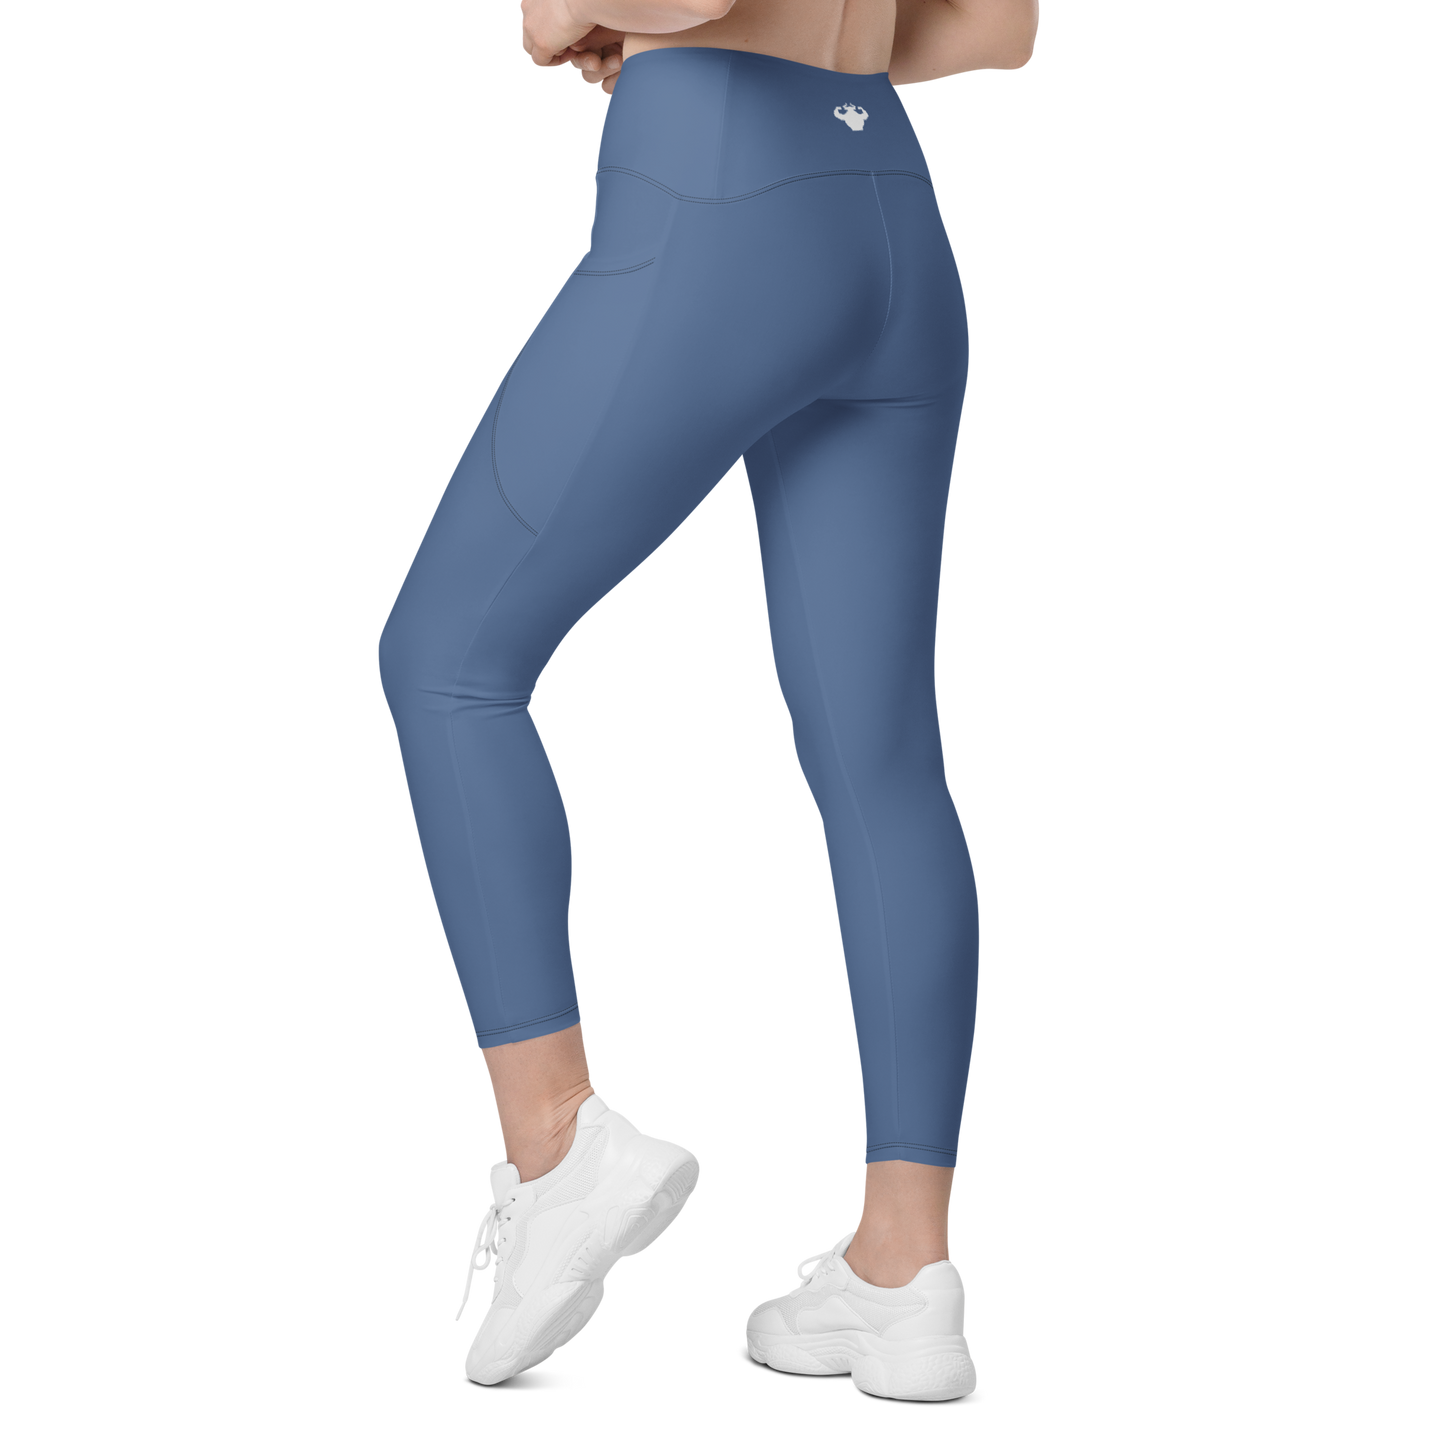 Strong and Humble Yoga Pants Yoga Pants - Strong and Humble Apparel